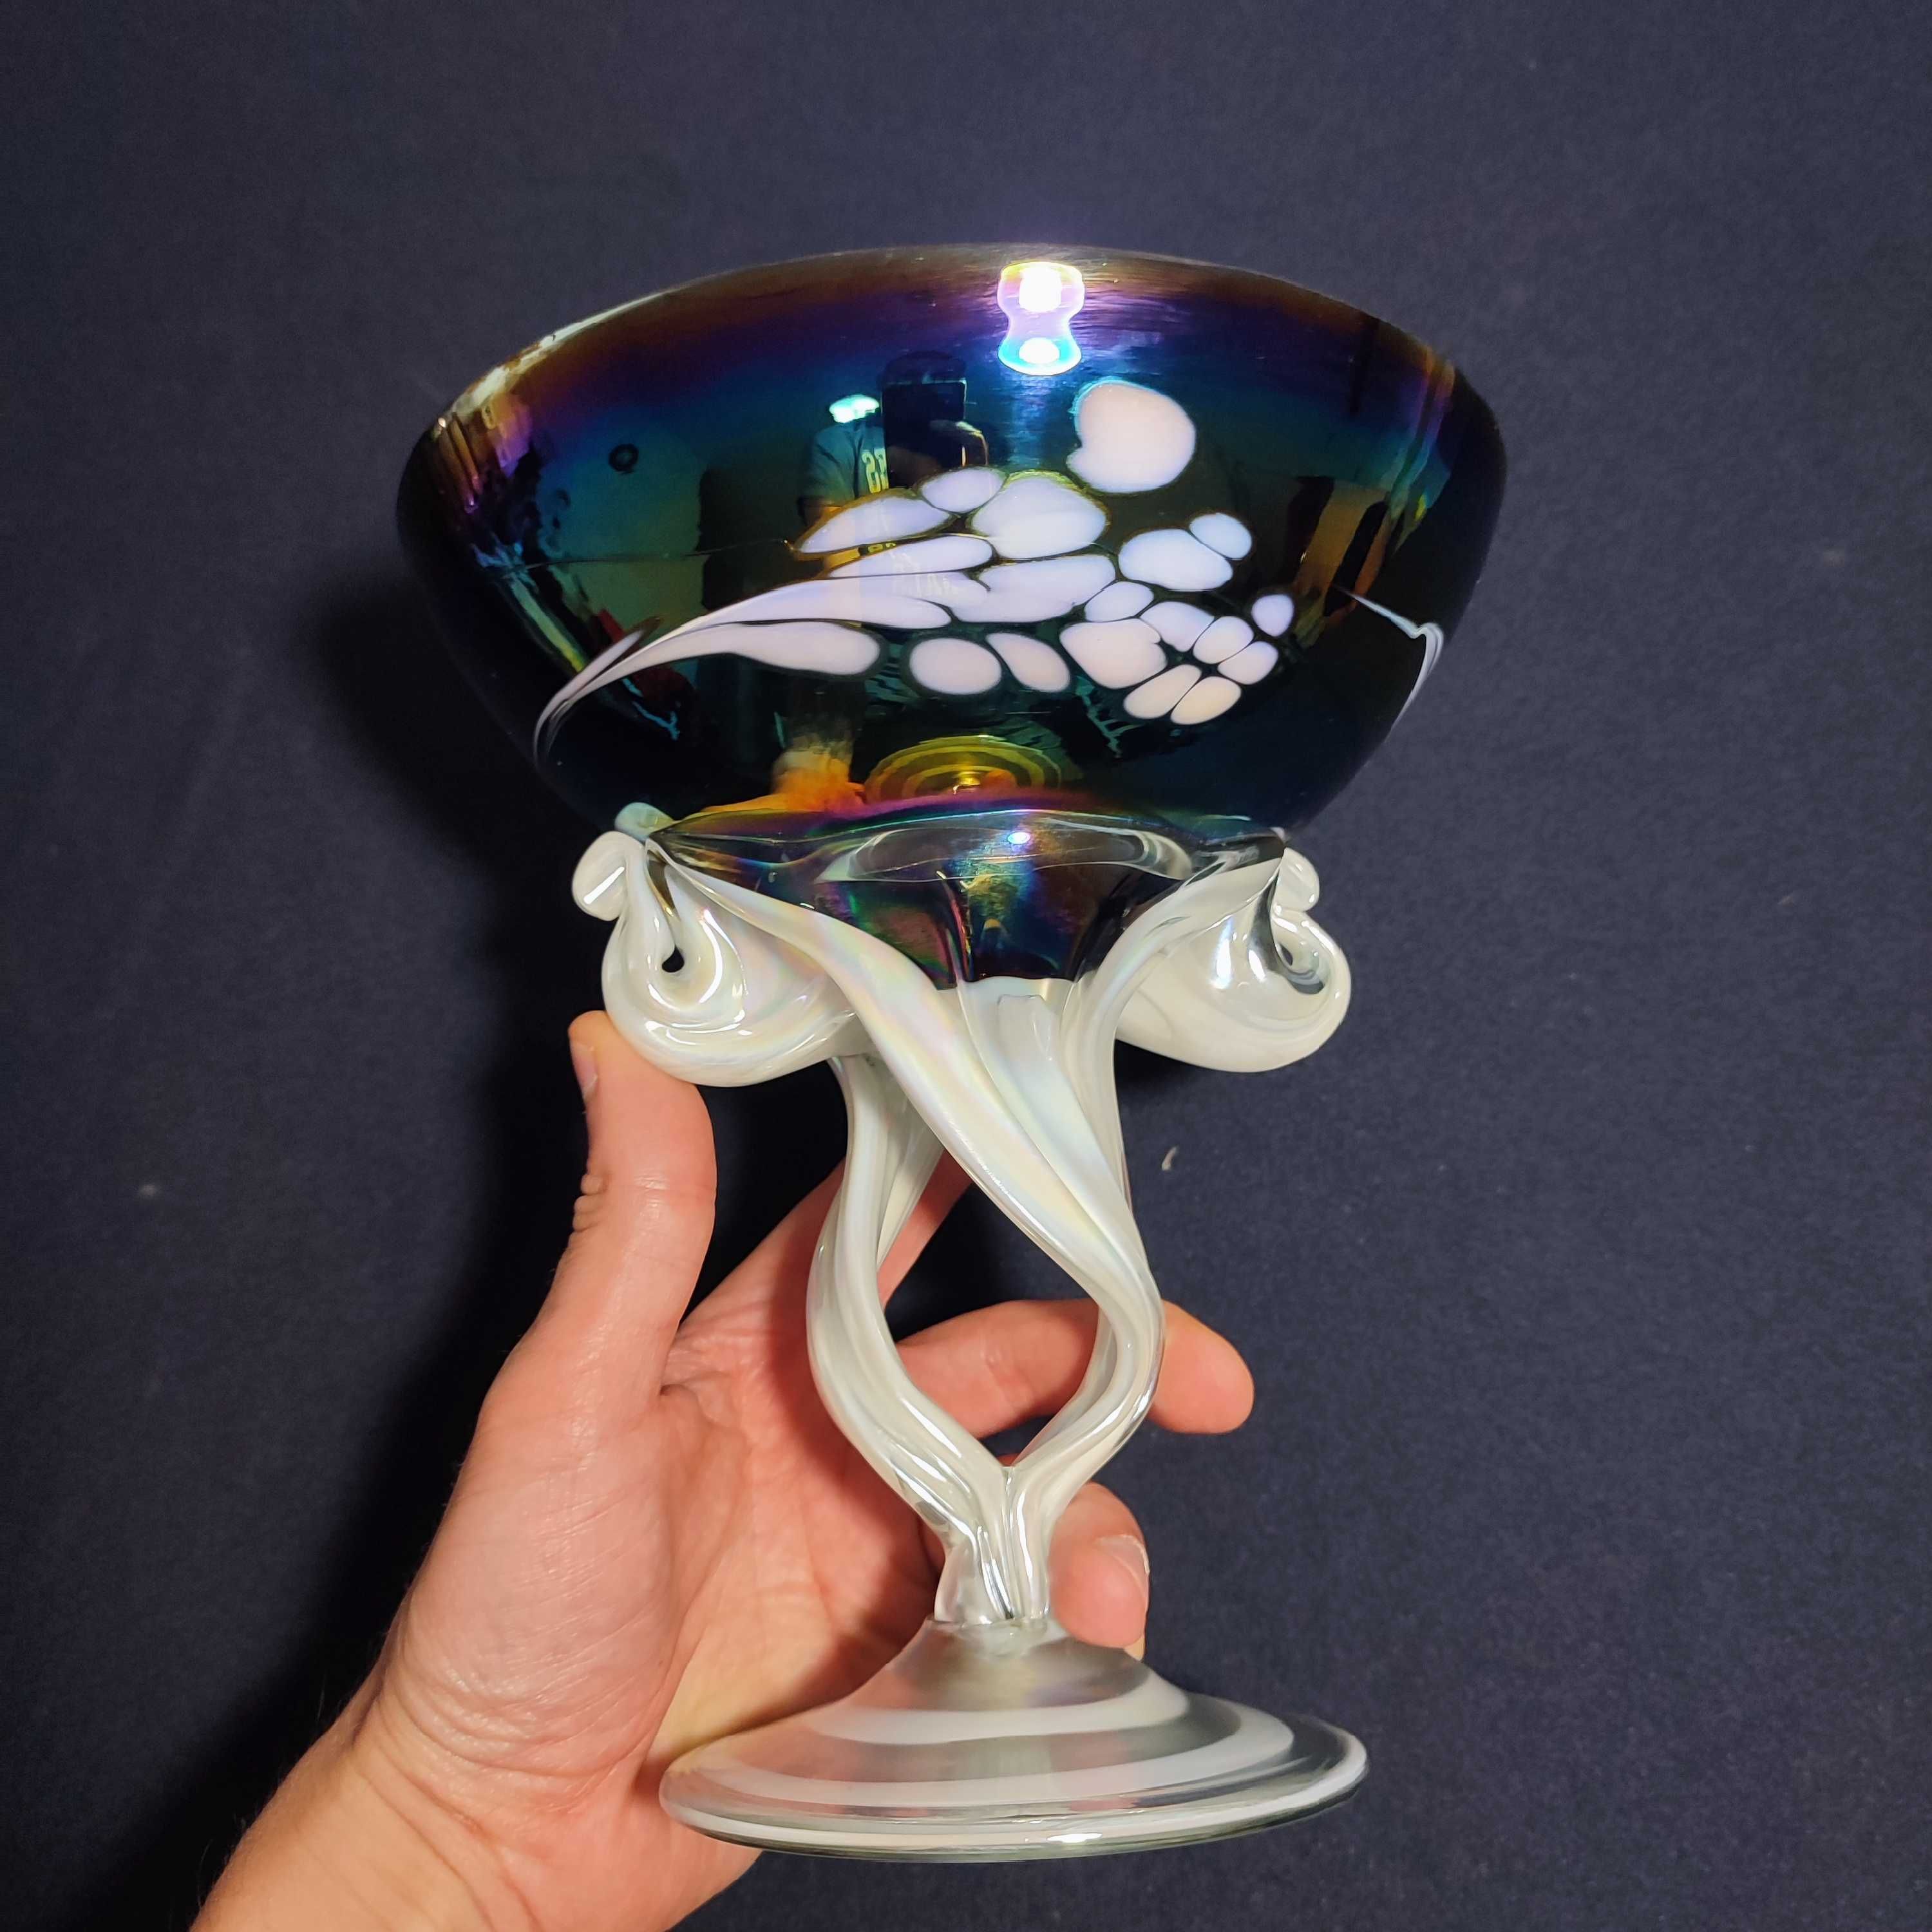 Puchar - wazon - patera szklana Murano, bardzo piękny i rzadki